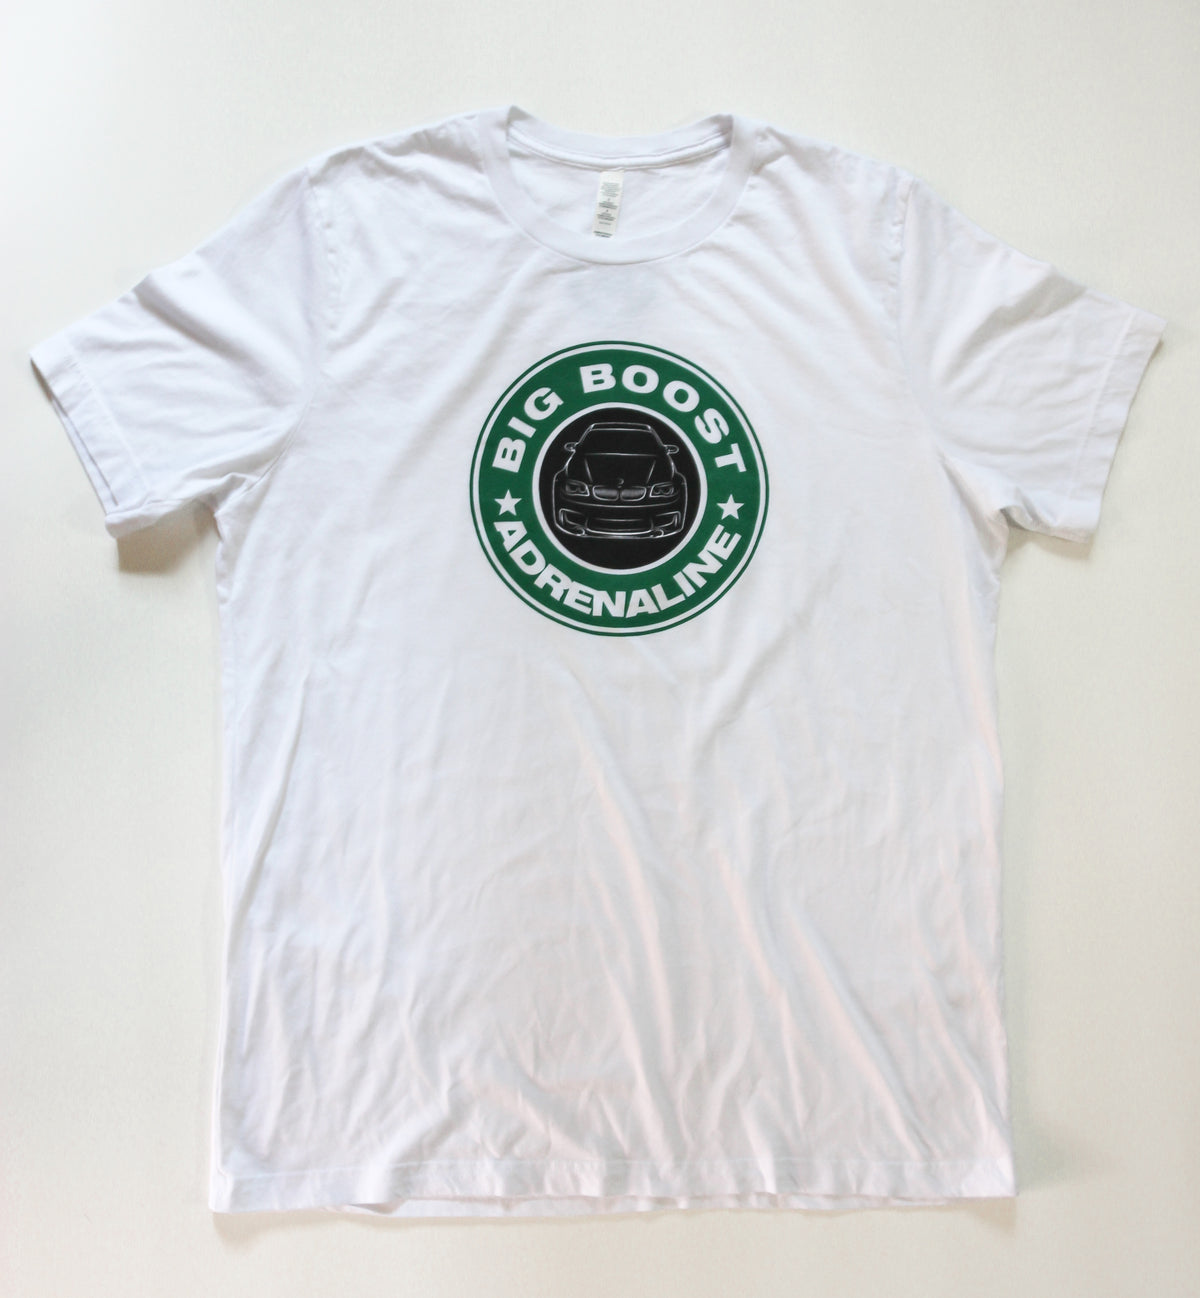 Big Boost - Short Sleeve T-shirt